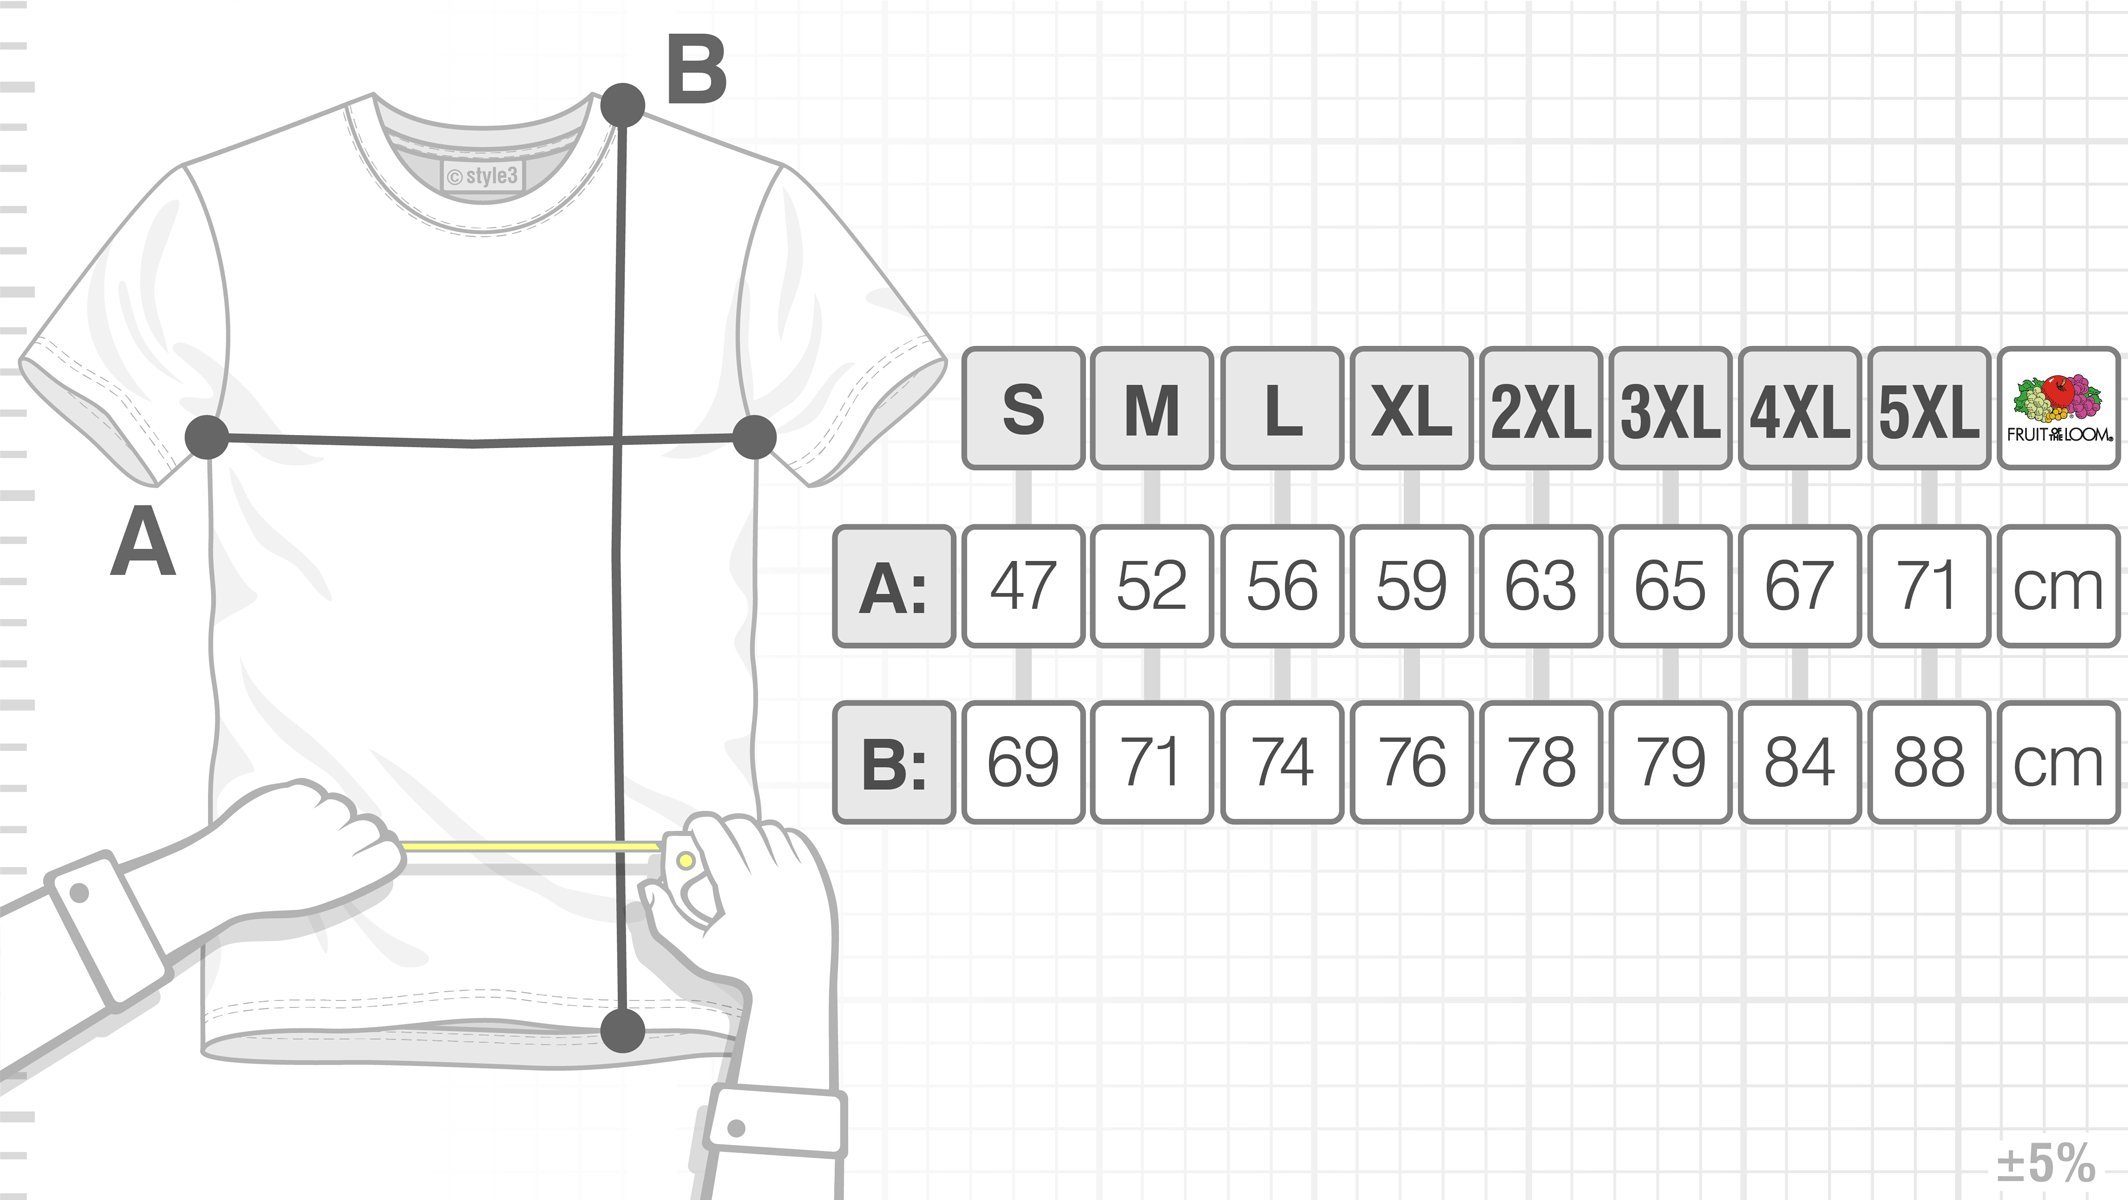 Würfel Big Cube Theory Penrose Herren Sheldon style3 Dreieck Bang T-Shirt Escher Print-Shirt Cooper lila